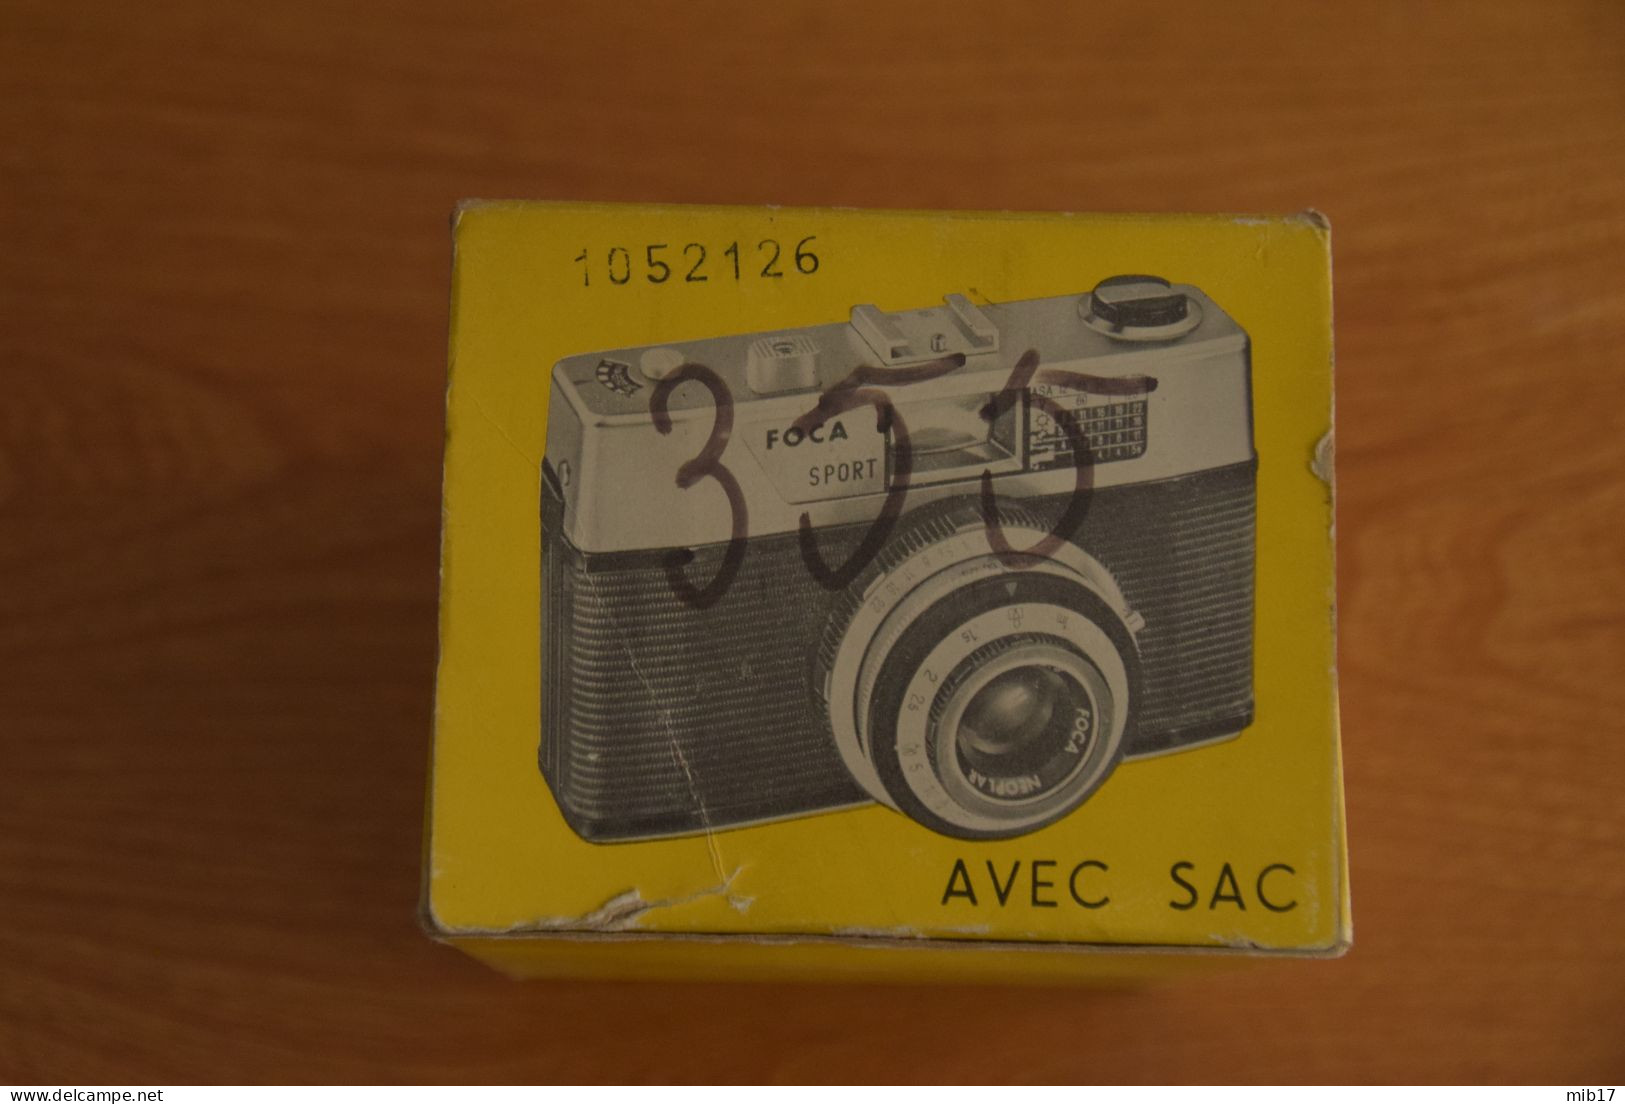 ancien appareil photo FOCA FOCASPORT avec boite,sac et mode d'emploi film 135 24x36